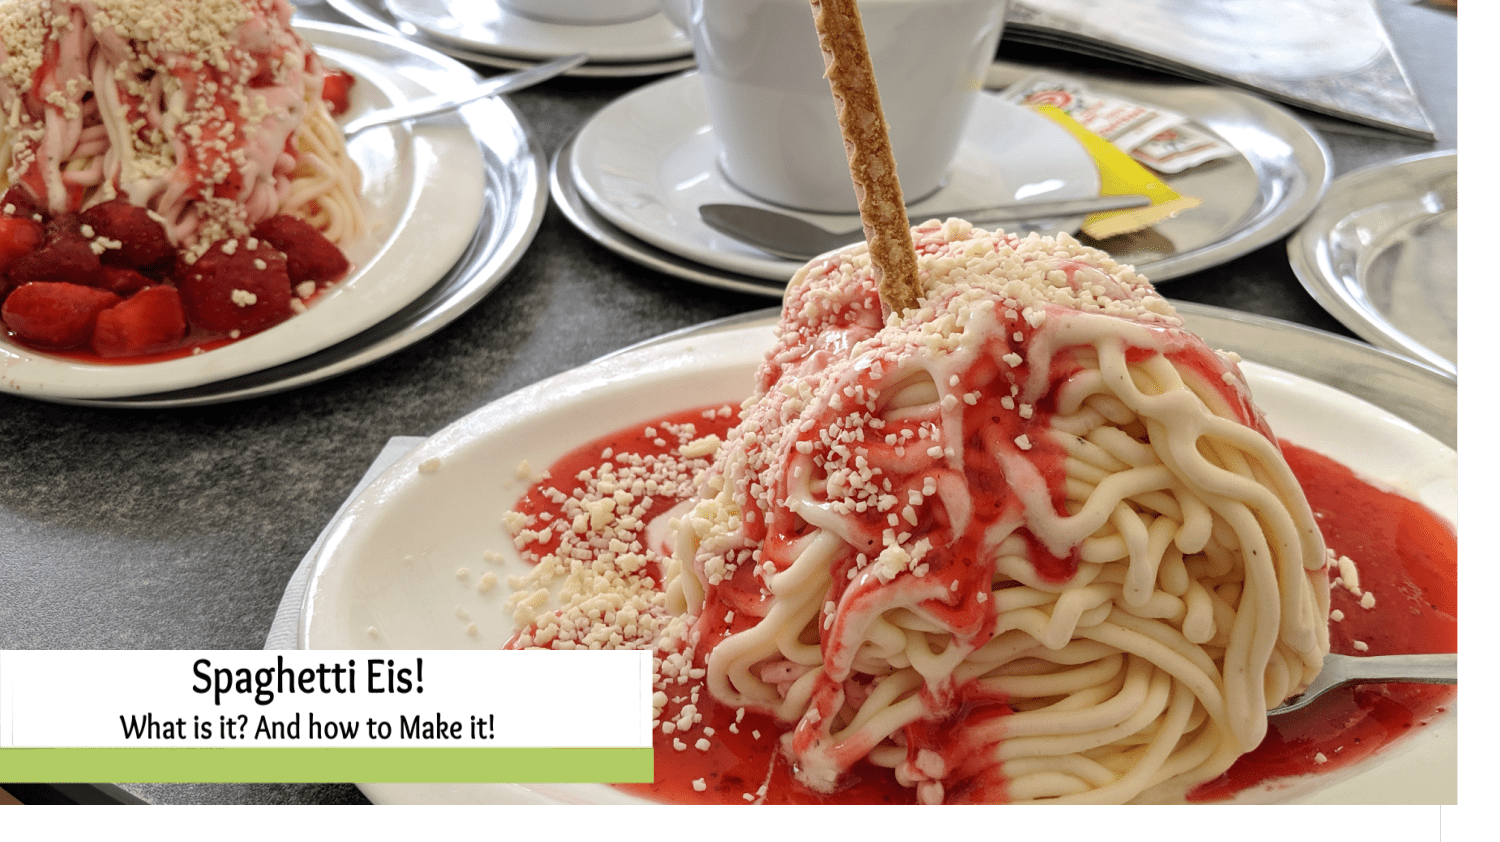 Spaghetti Eis Recipe- How to Make This Favorite German Ice Cream Dessert at HOME!